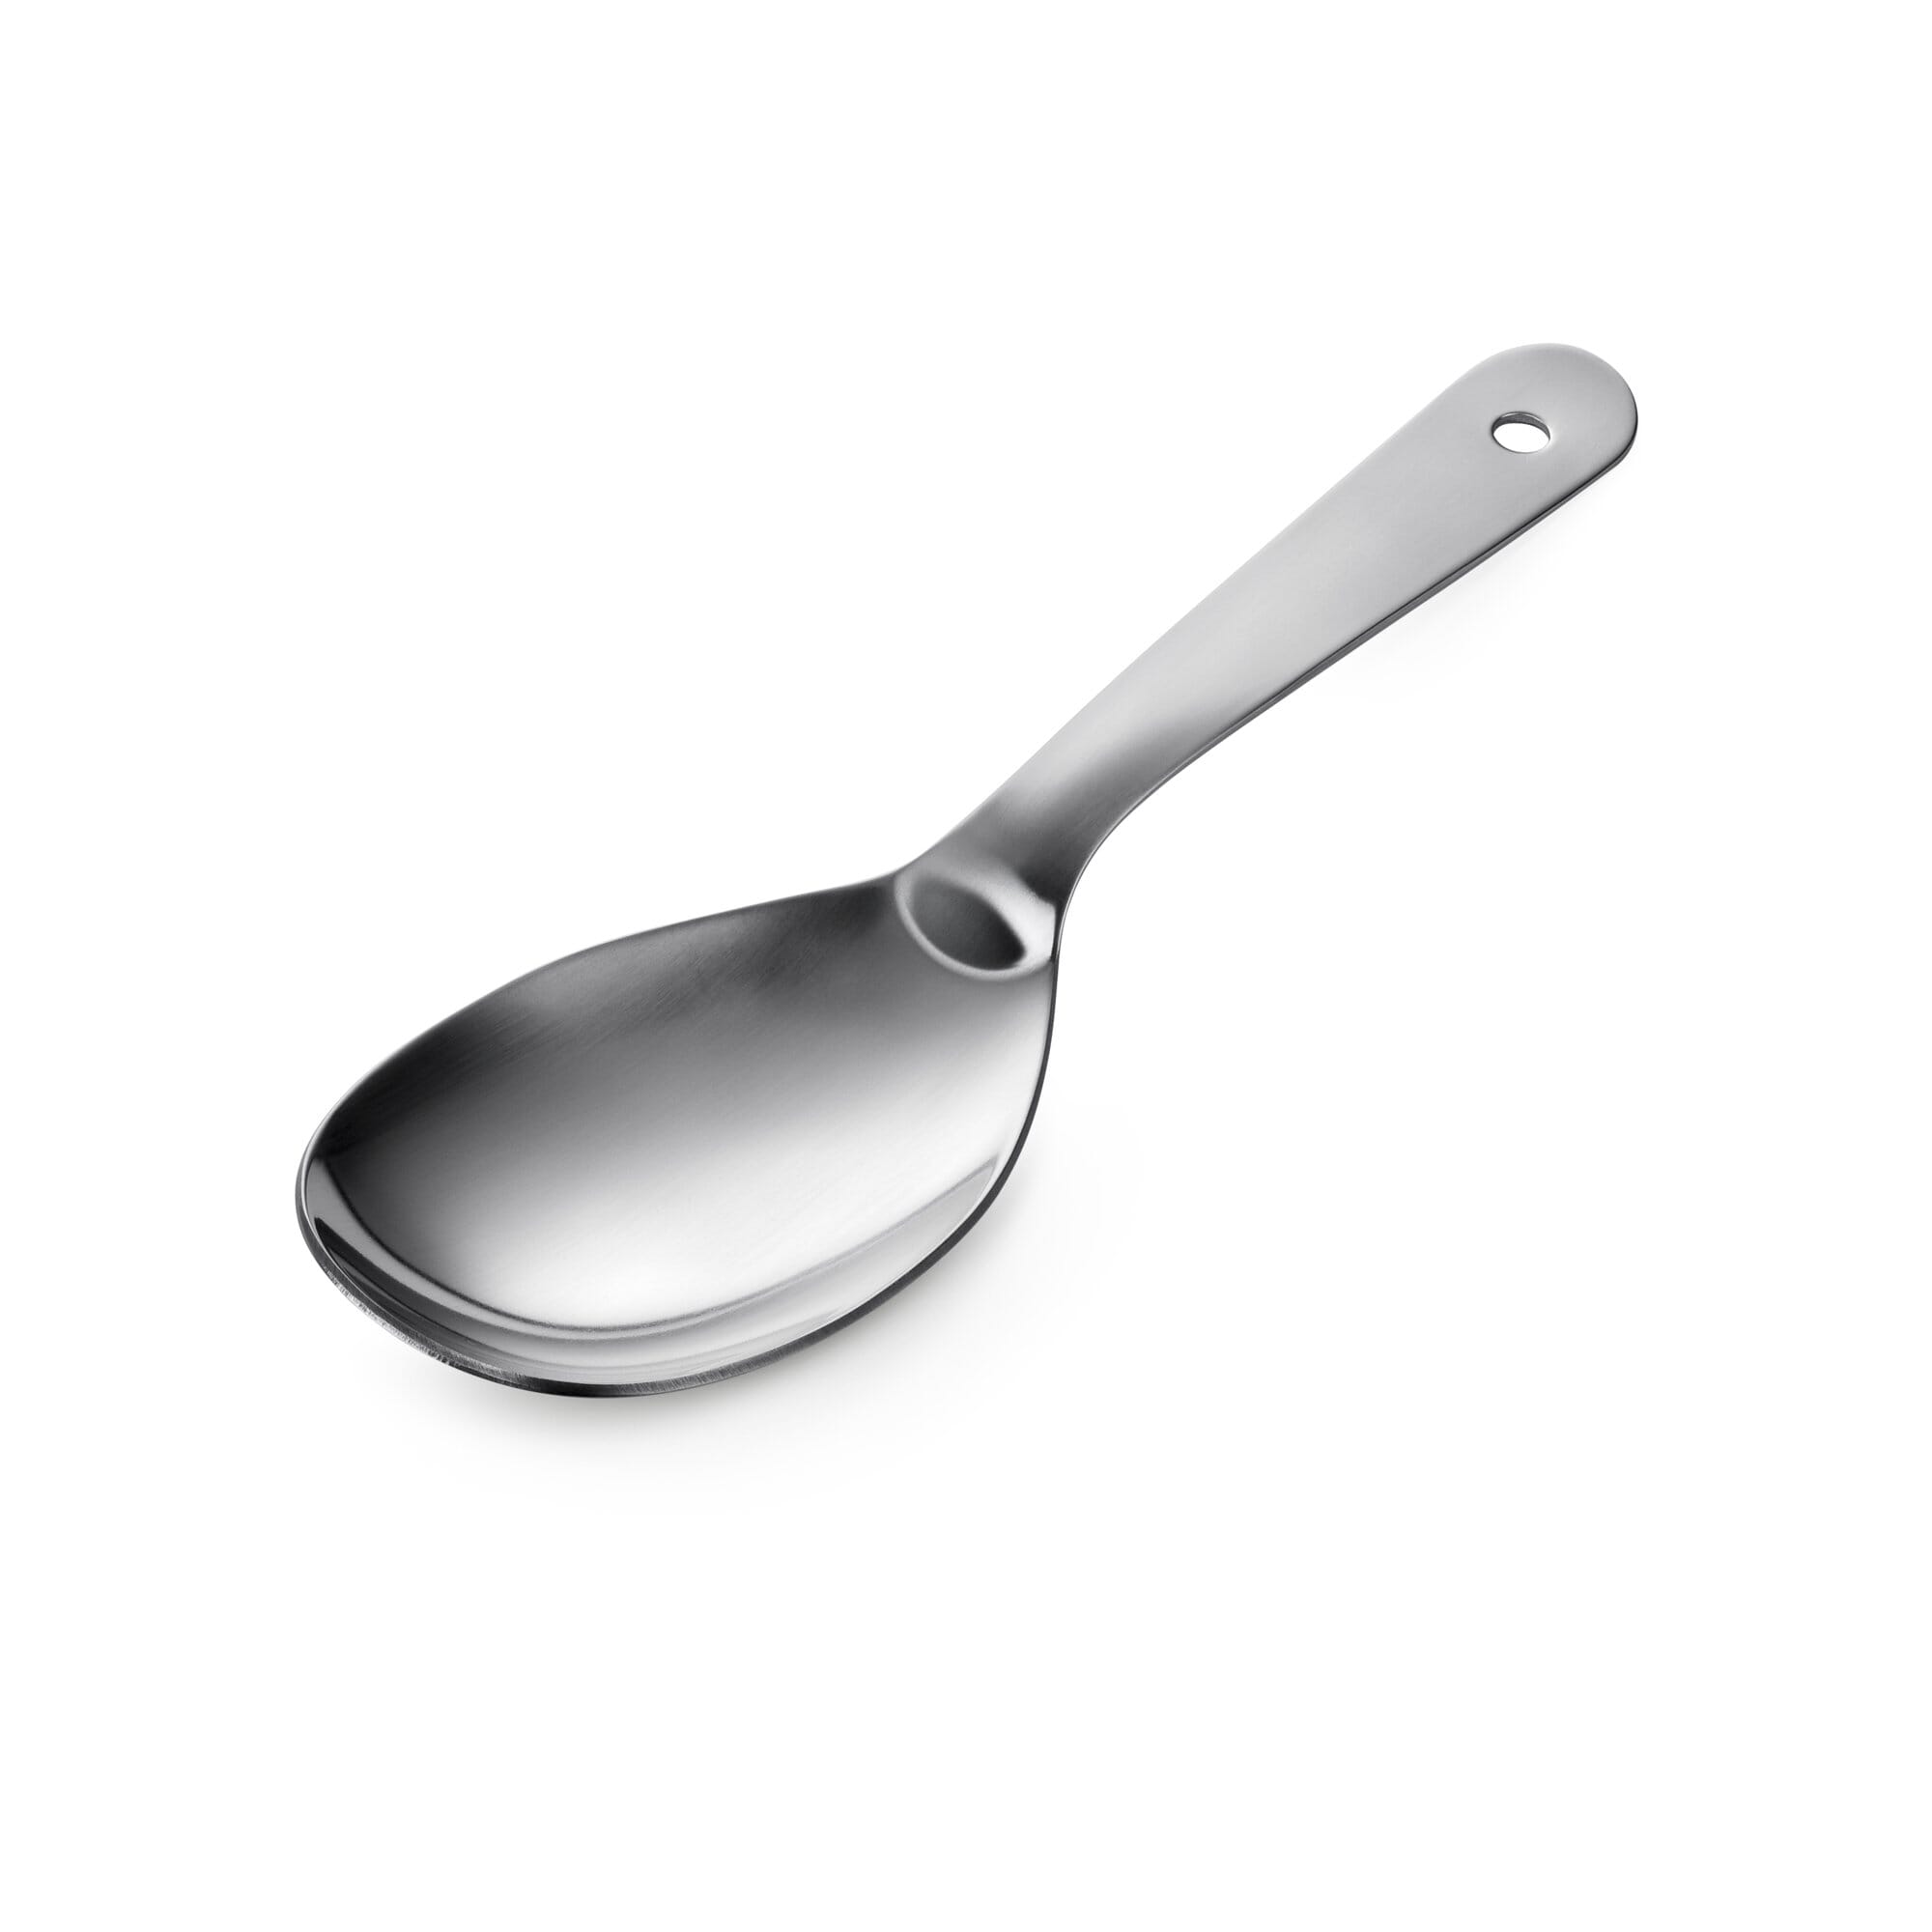 https://assets.manufactum.de/p/027/027512/27512_01.jpg/serving-spoon-stainless-steel.jpg